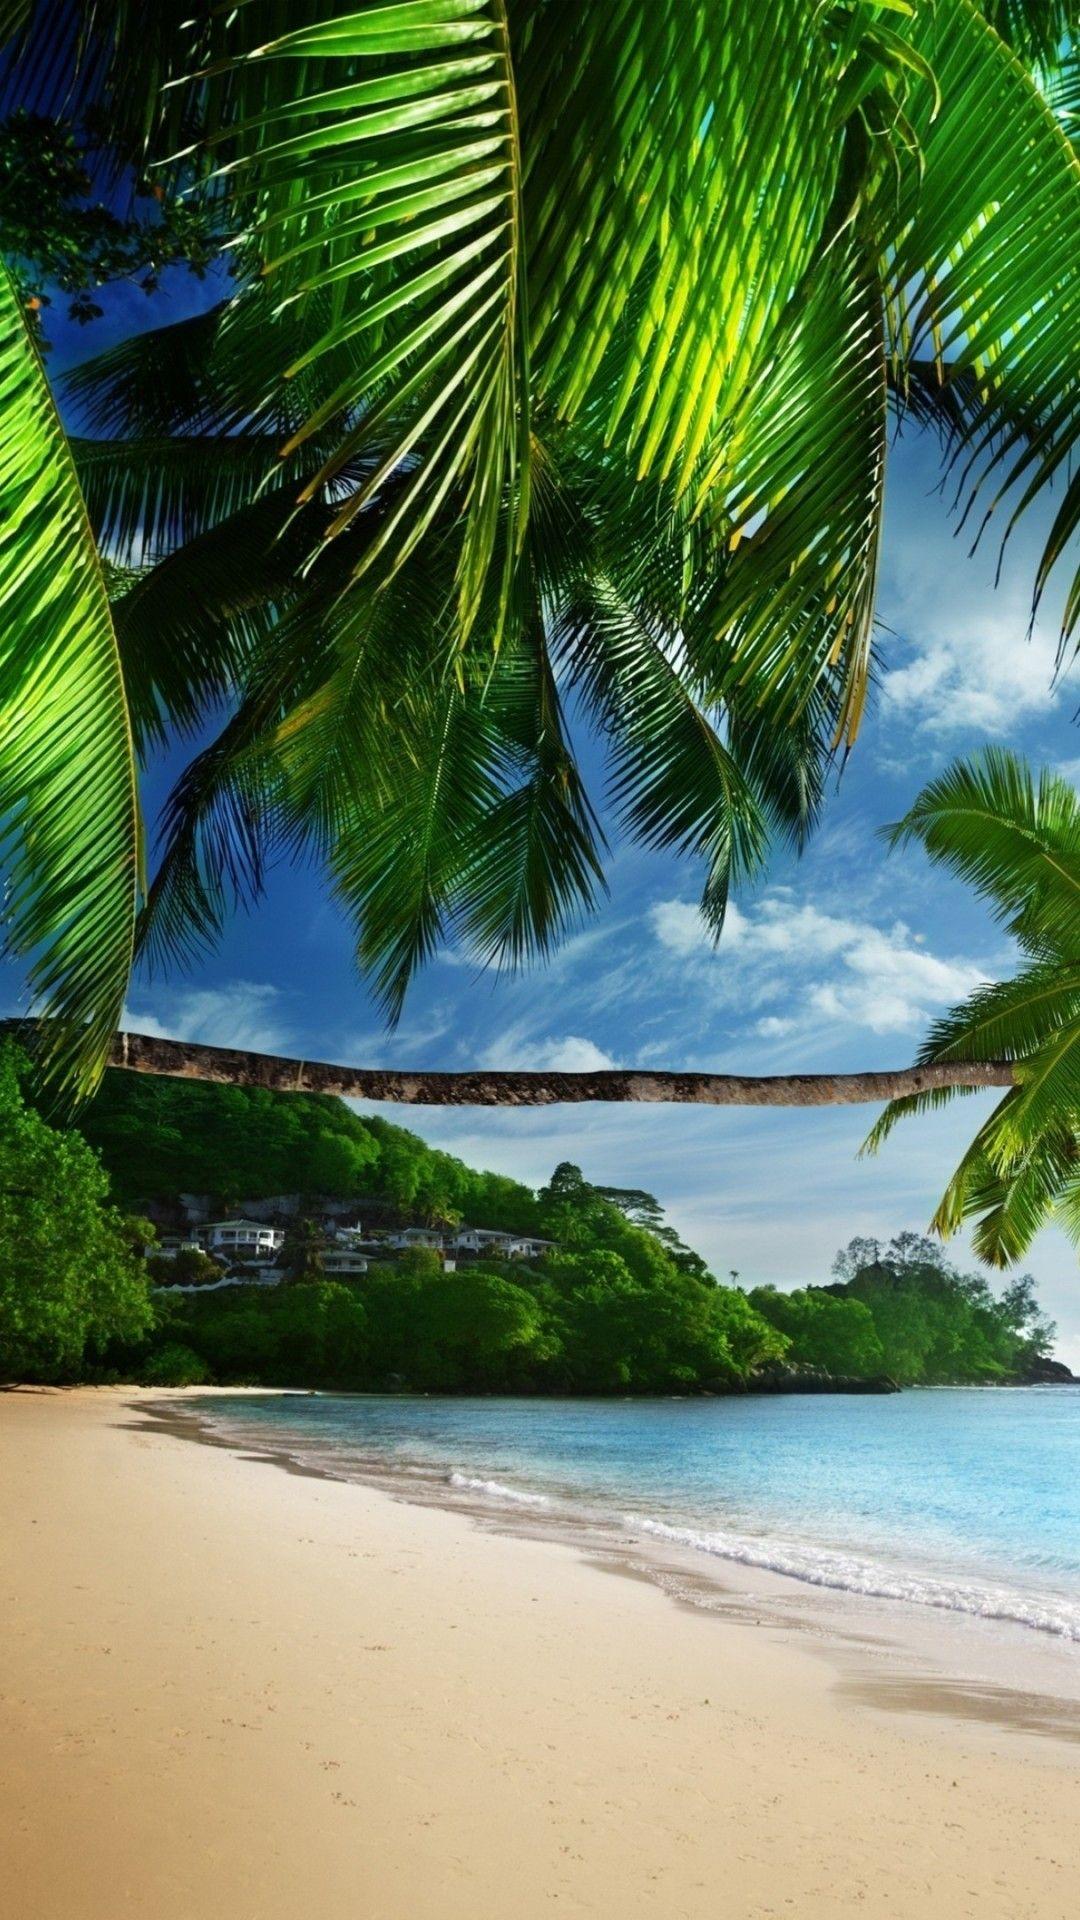 Beach Tropical iPhone Wallpapers - Top Free Beach Tropical iPhone